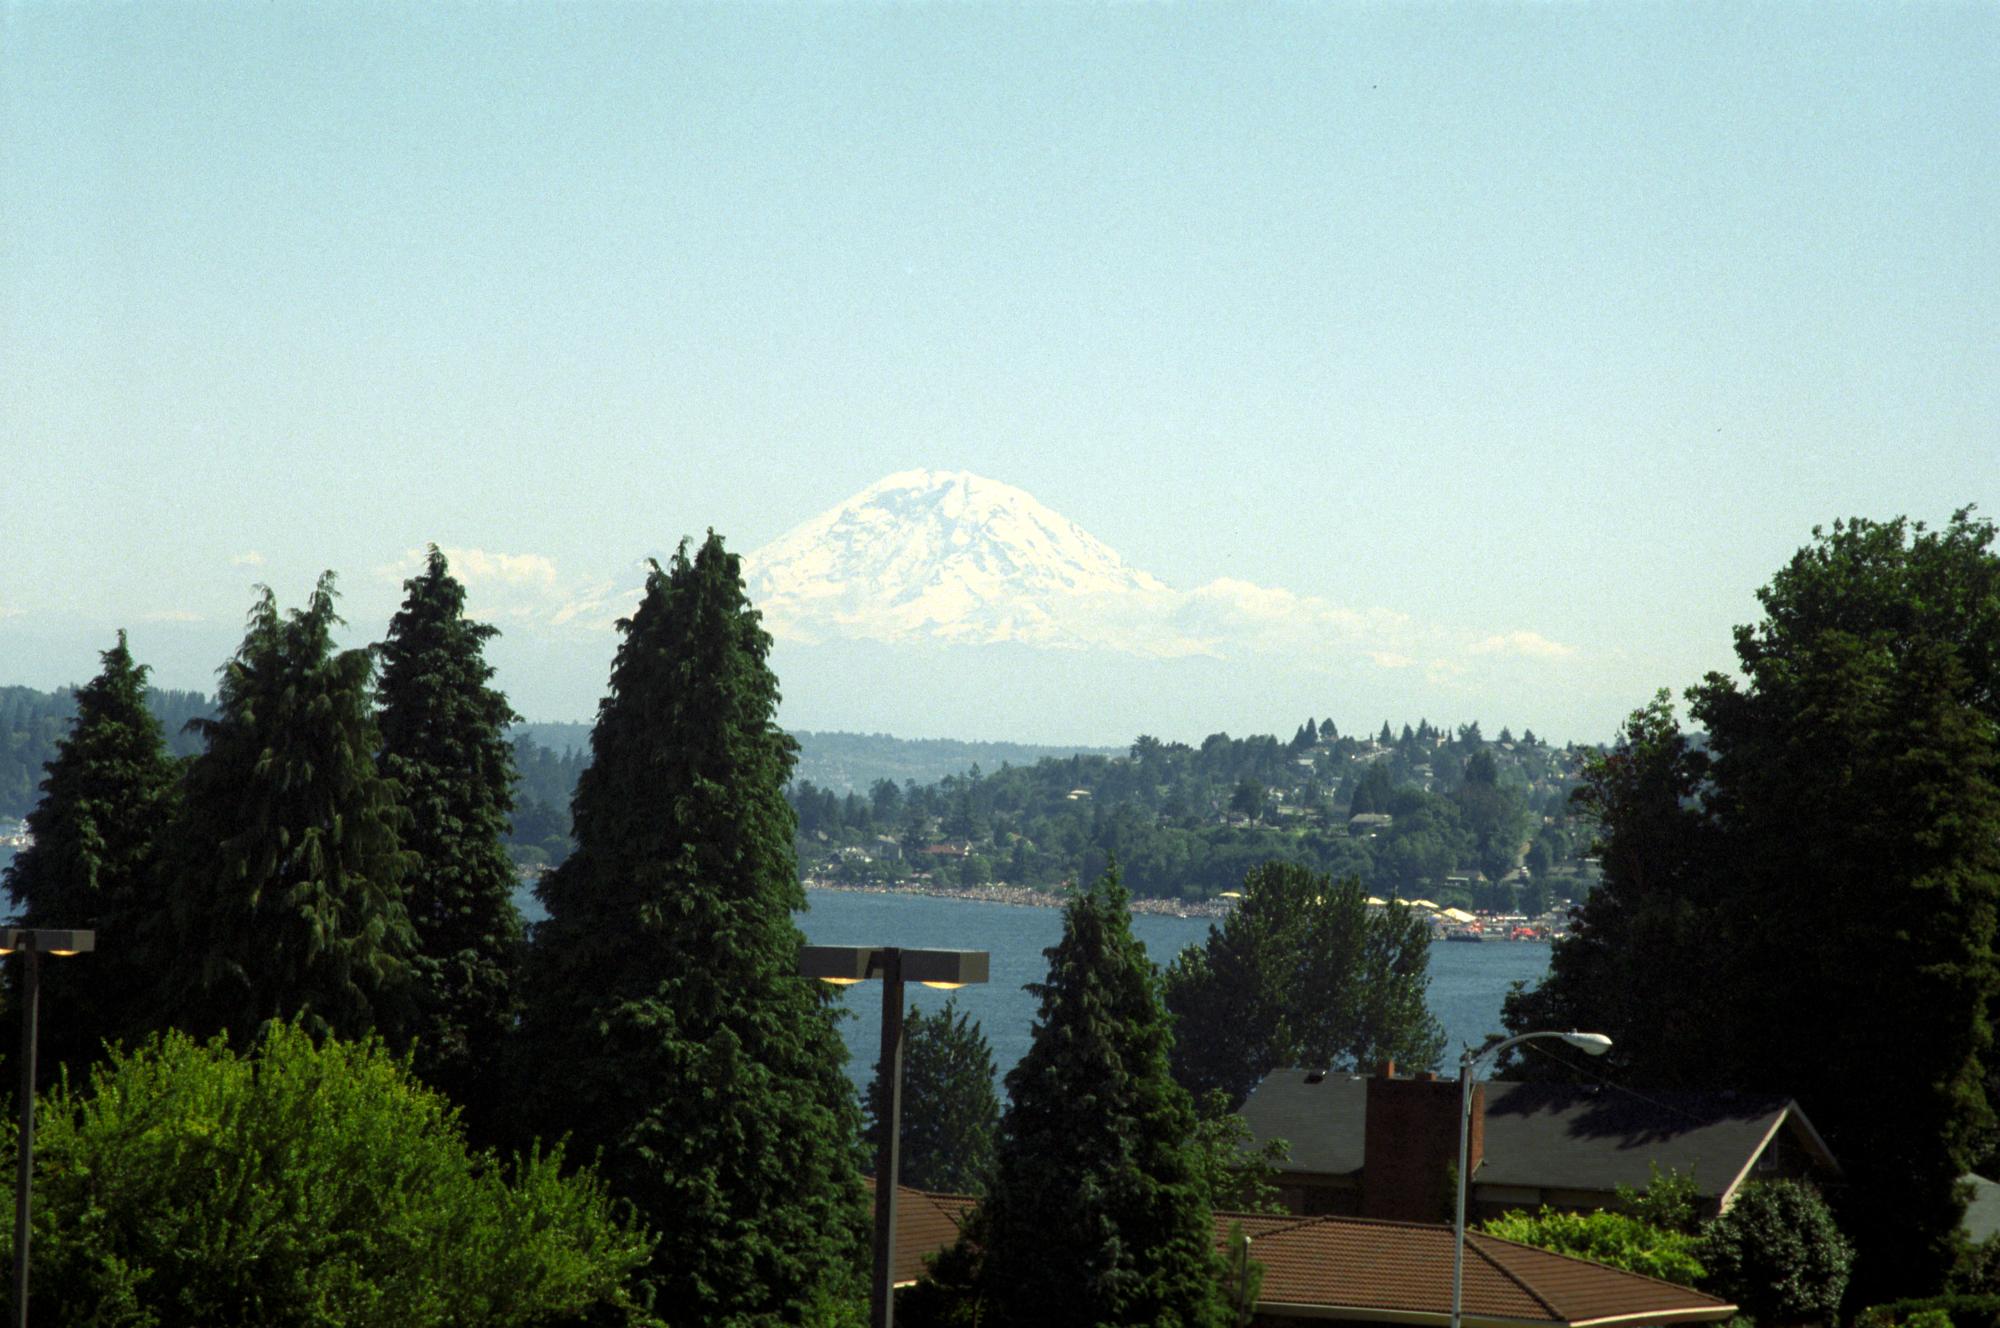 Seattle (1993) - Mt Rainier